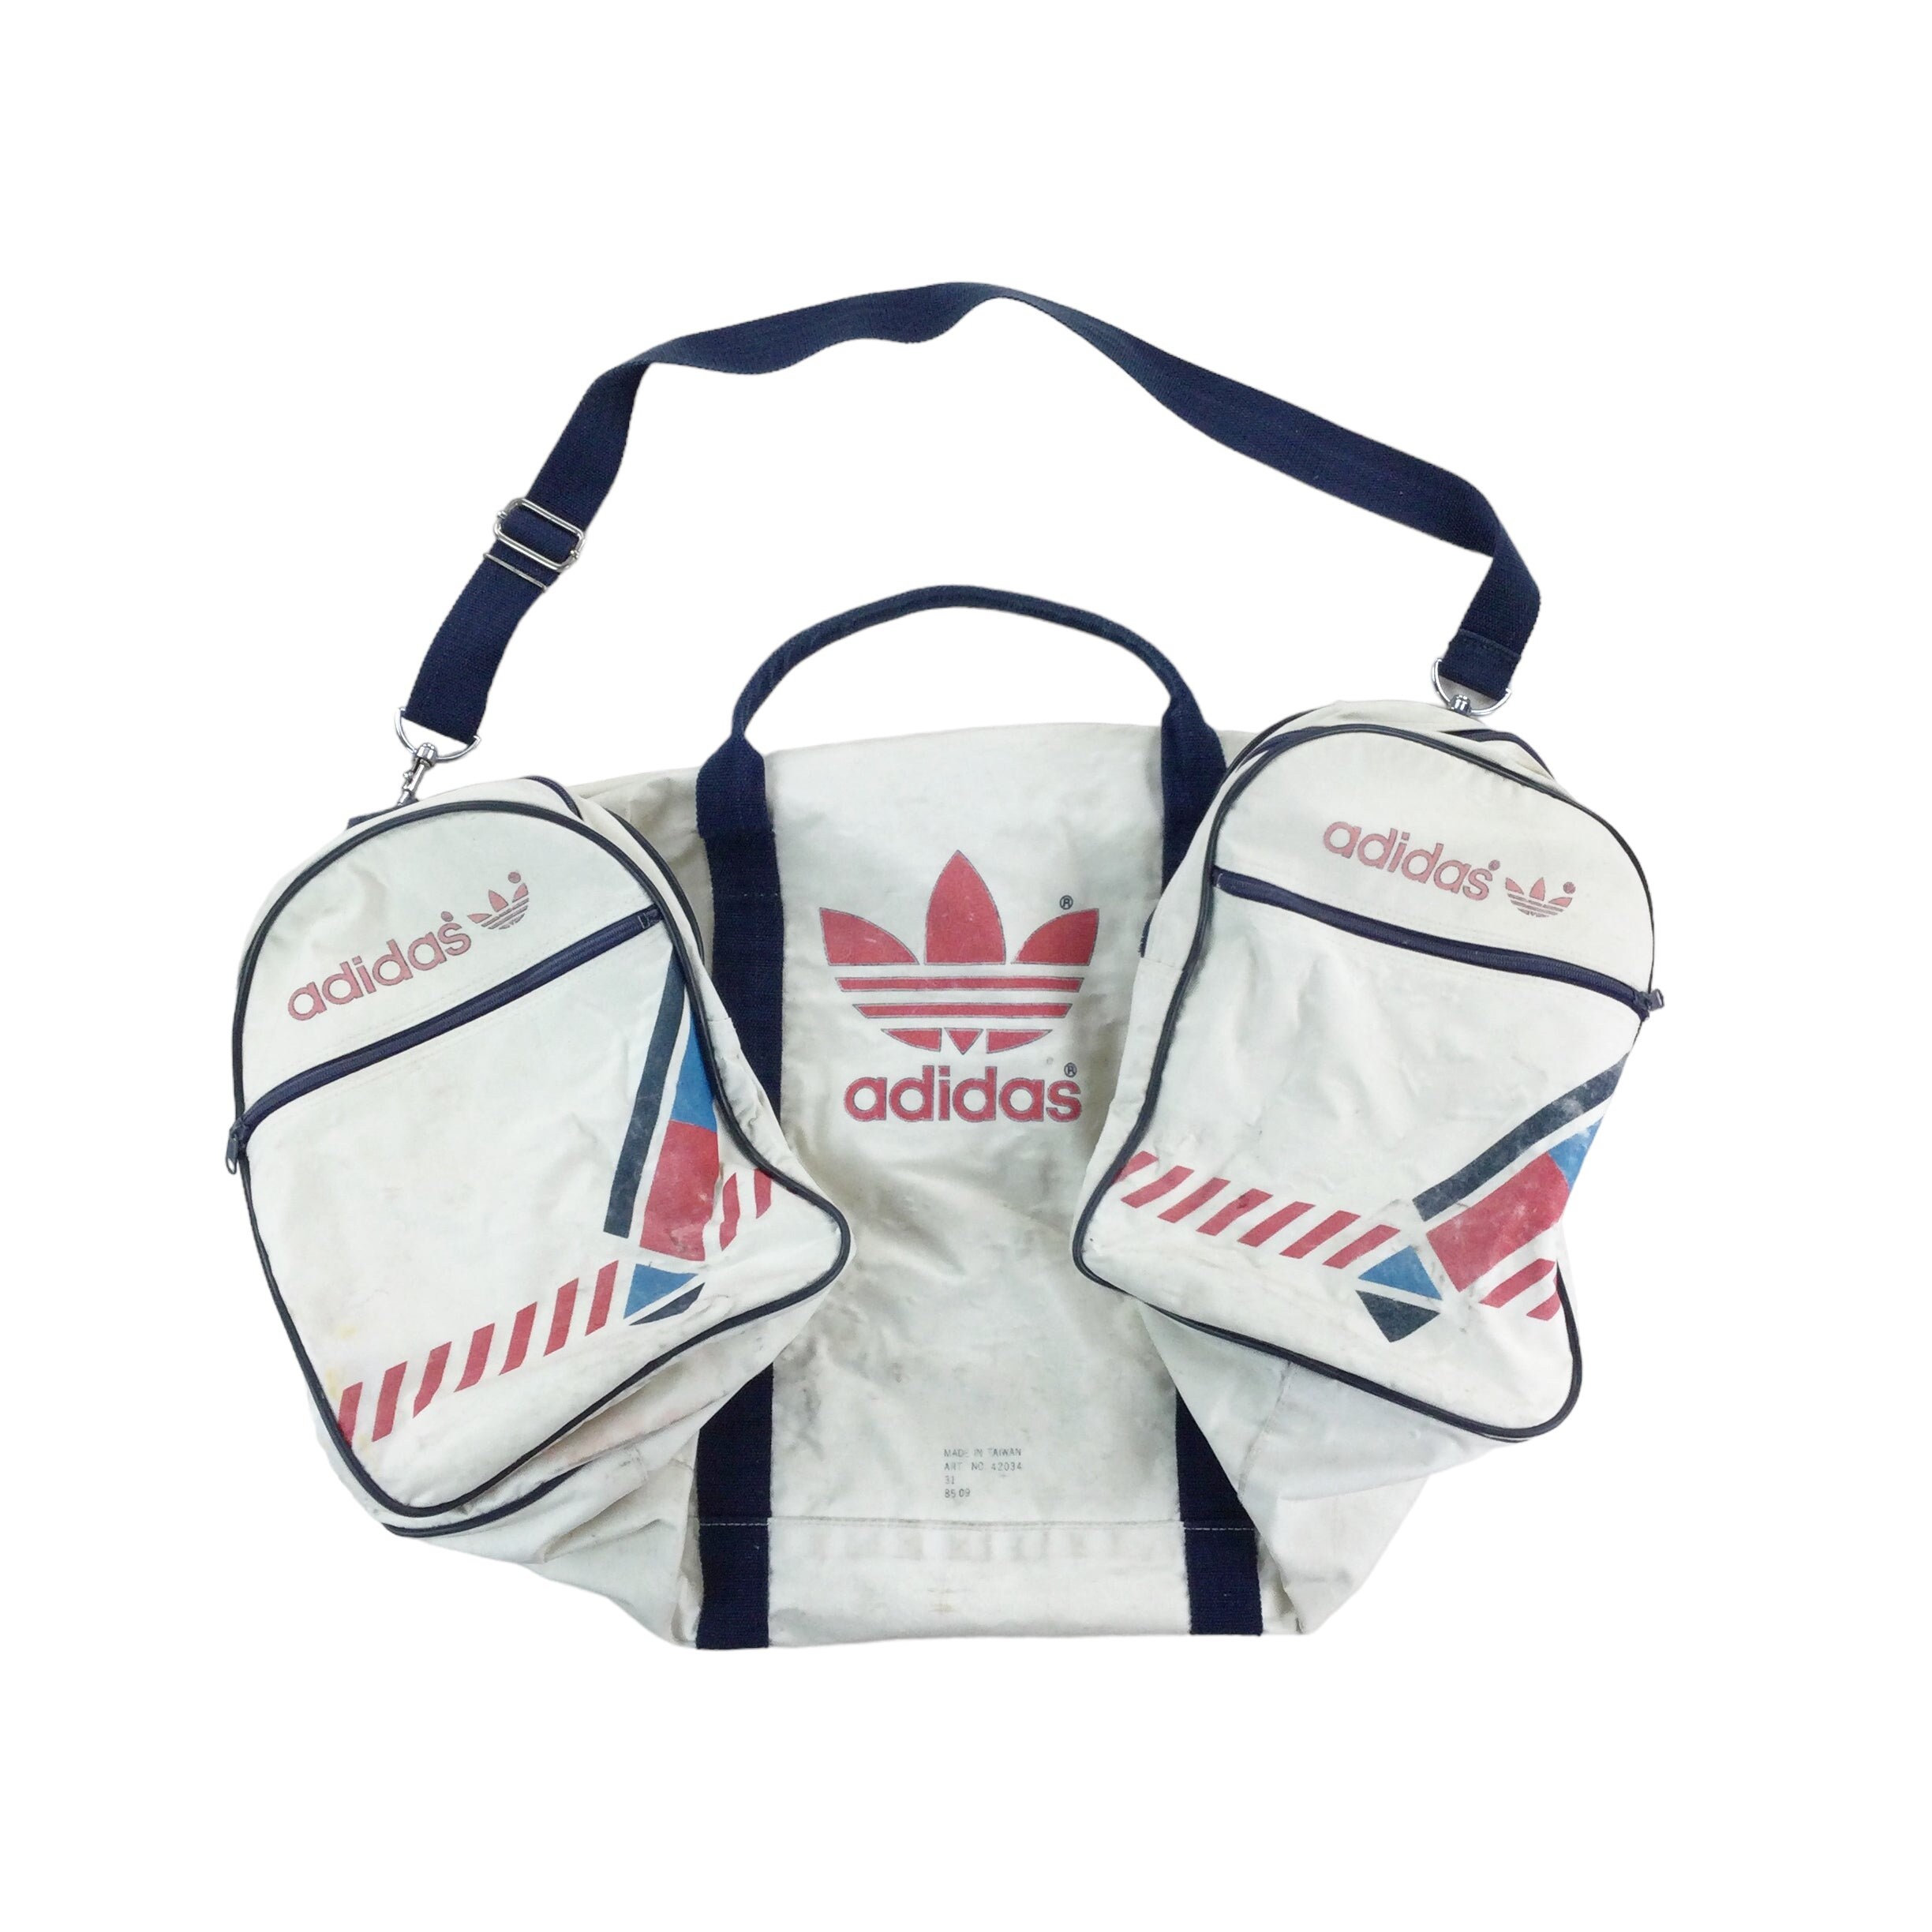 Puma backpack Nike Adidas bag nike accessories puma adidas  Sports  accessories  Official archives of Merkandi  Merkandi B2B